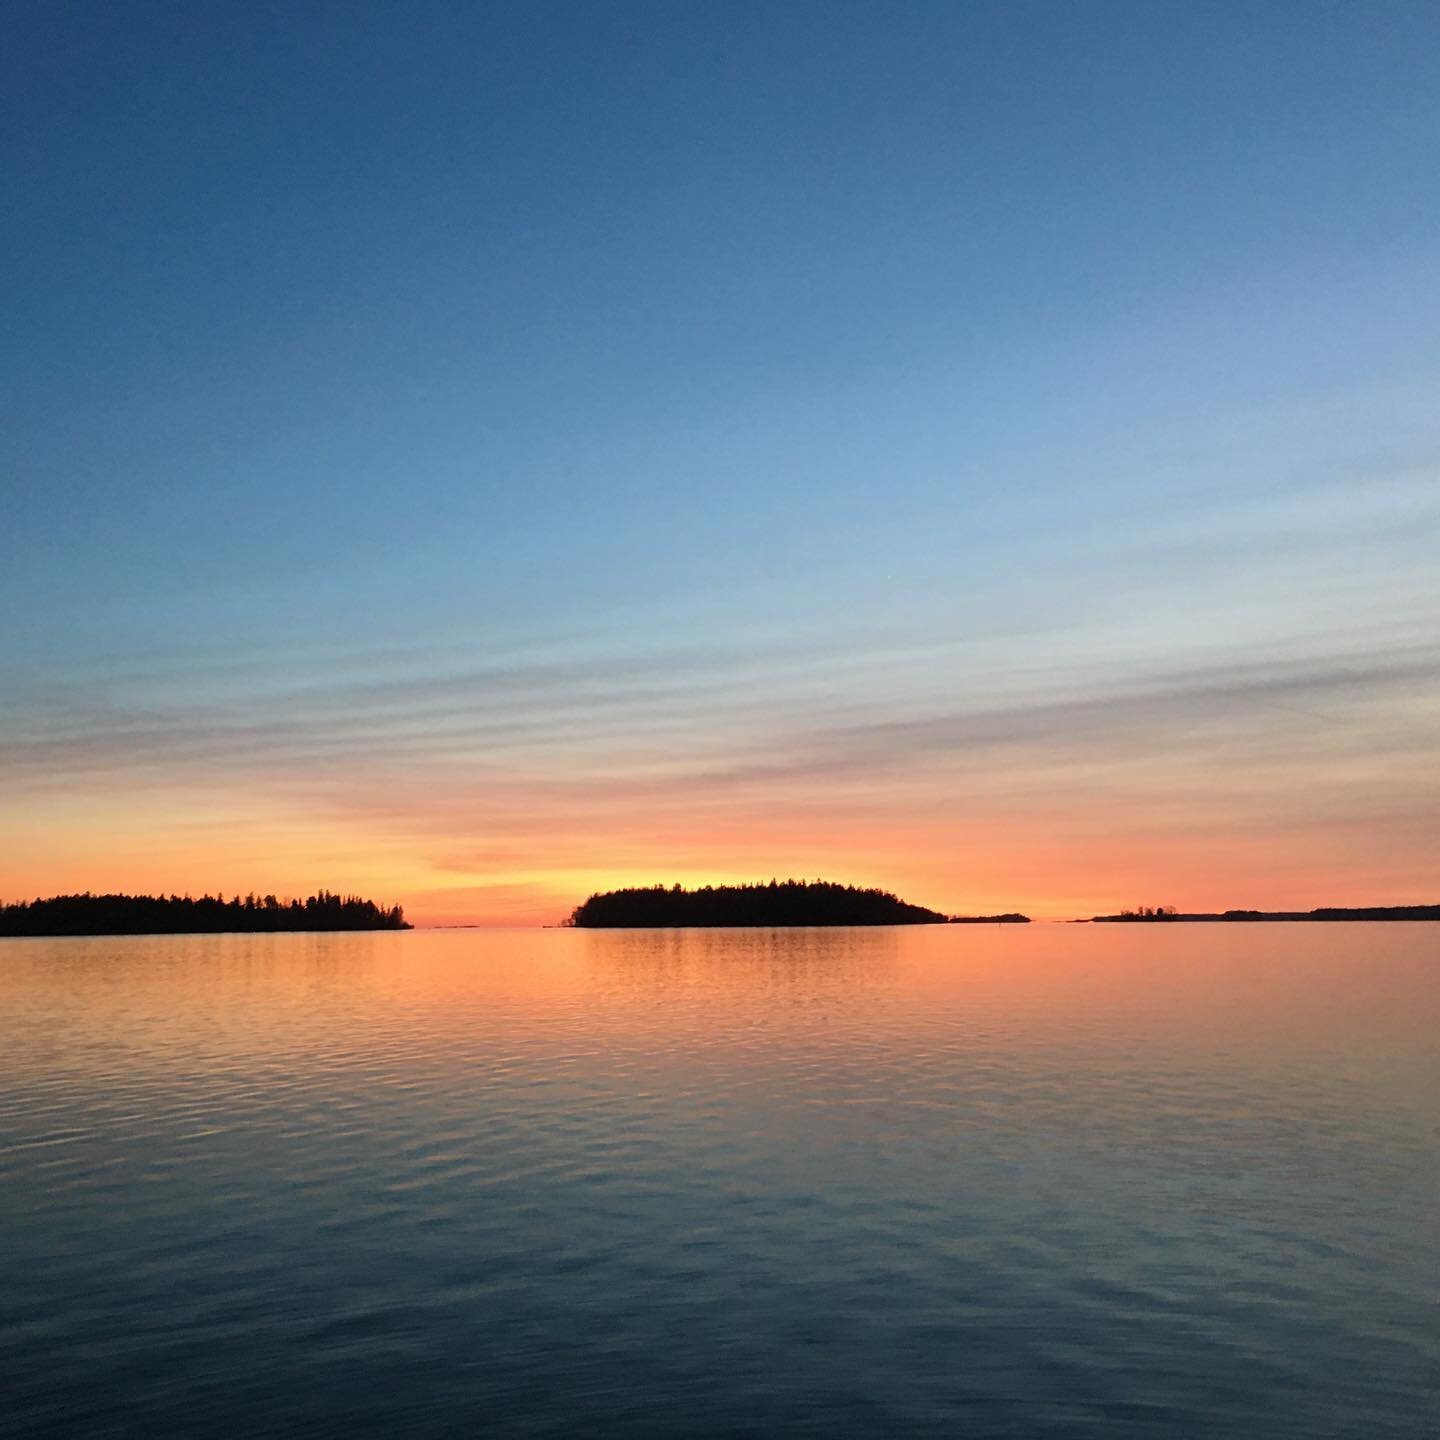 Winter in Finland, 2020
#sunsetinfinland #hopeforaustralia